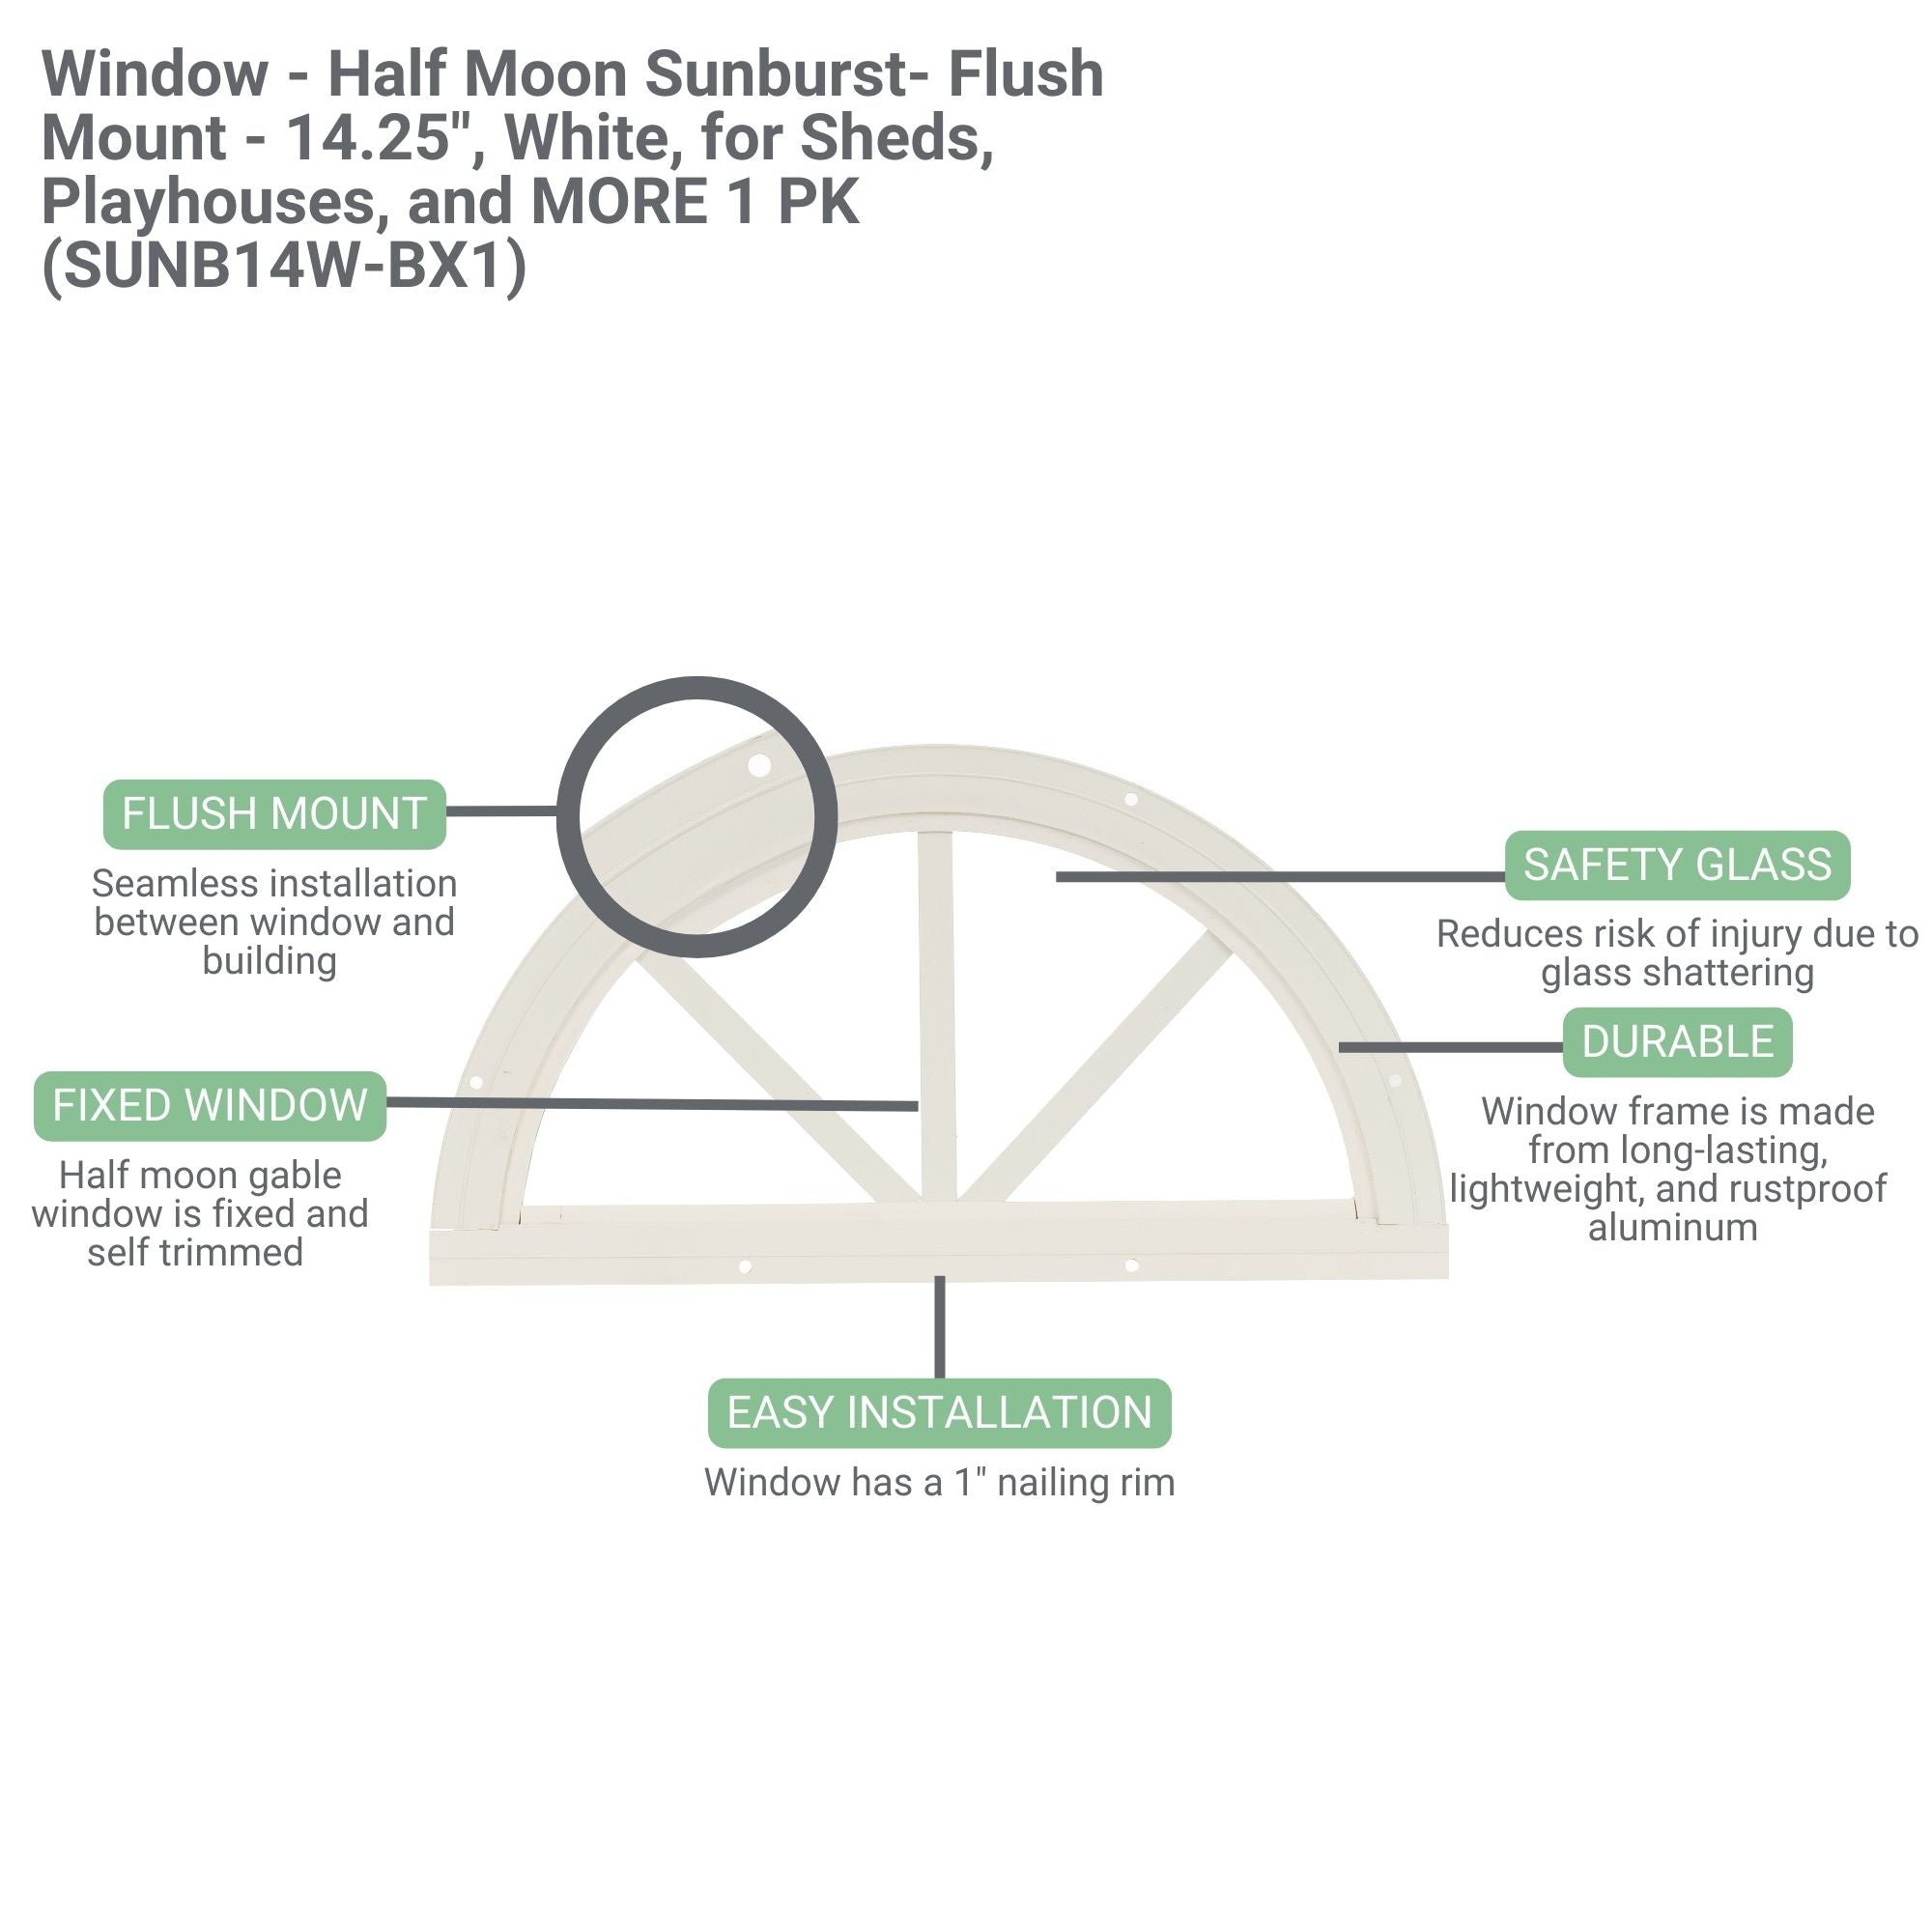 14.25" Half Moon Sunburst Flush Mount Shed Window